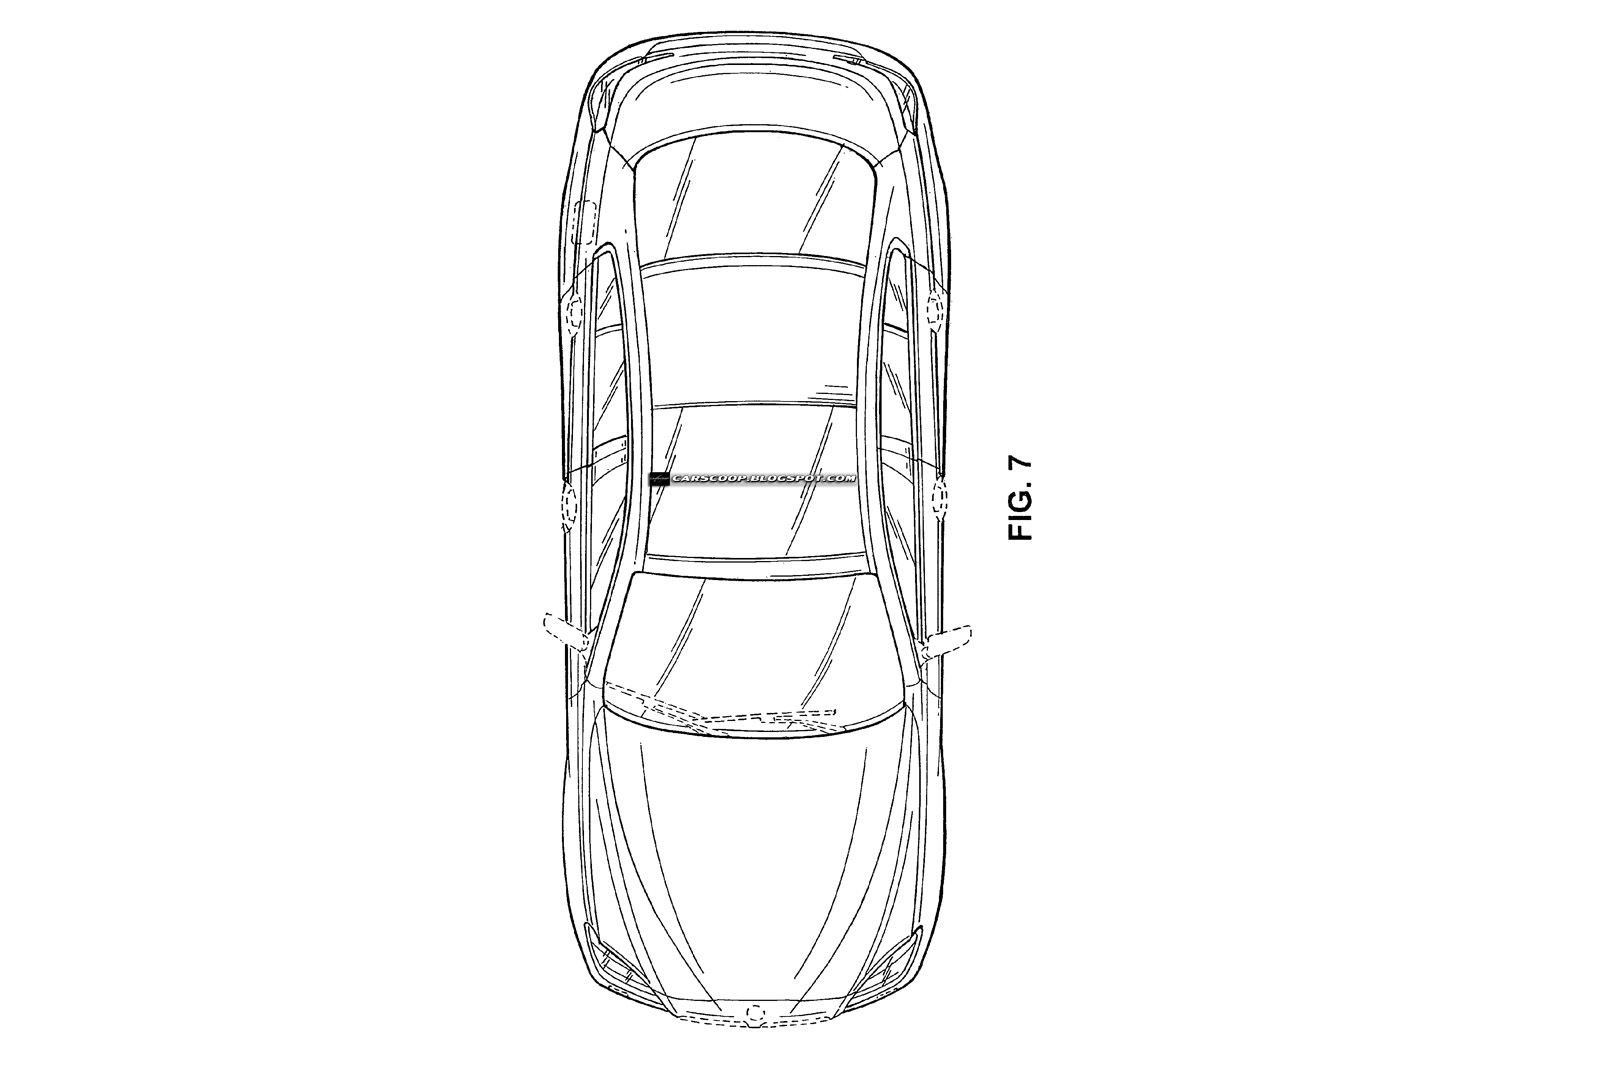 New BMW 4-Door Sports Coupé Official Patent Designs - ForceGT.com